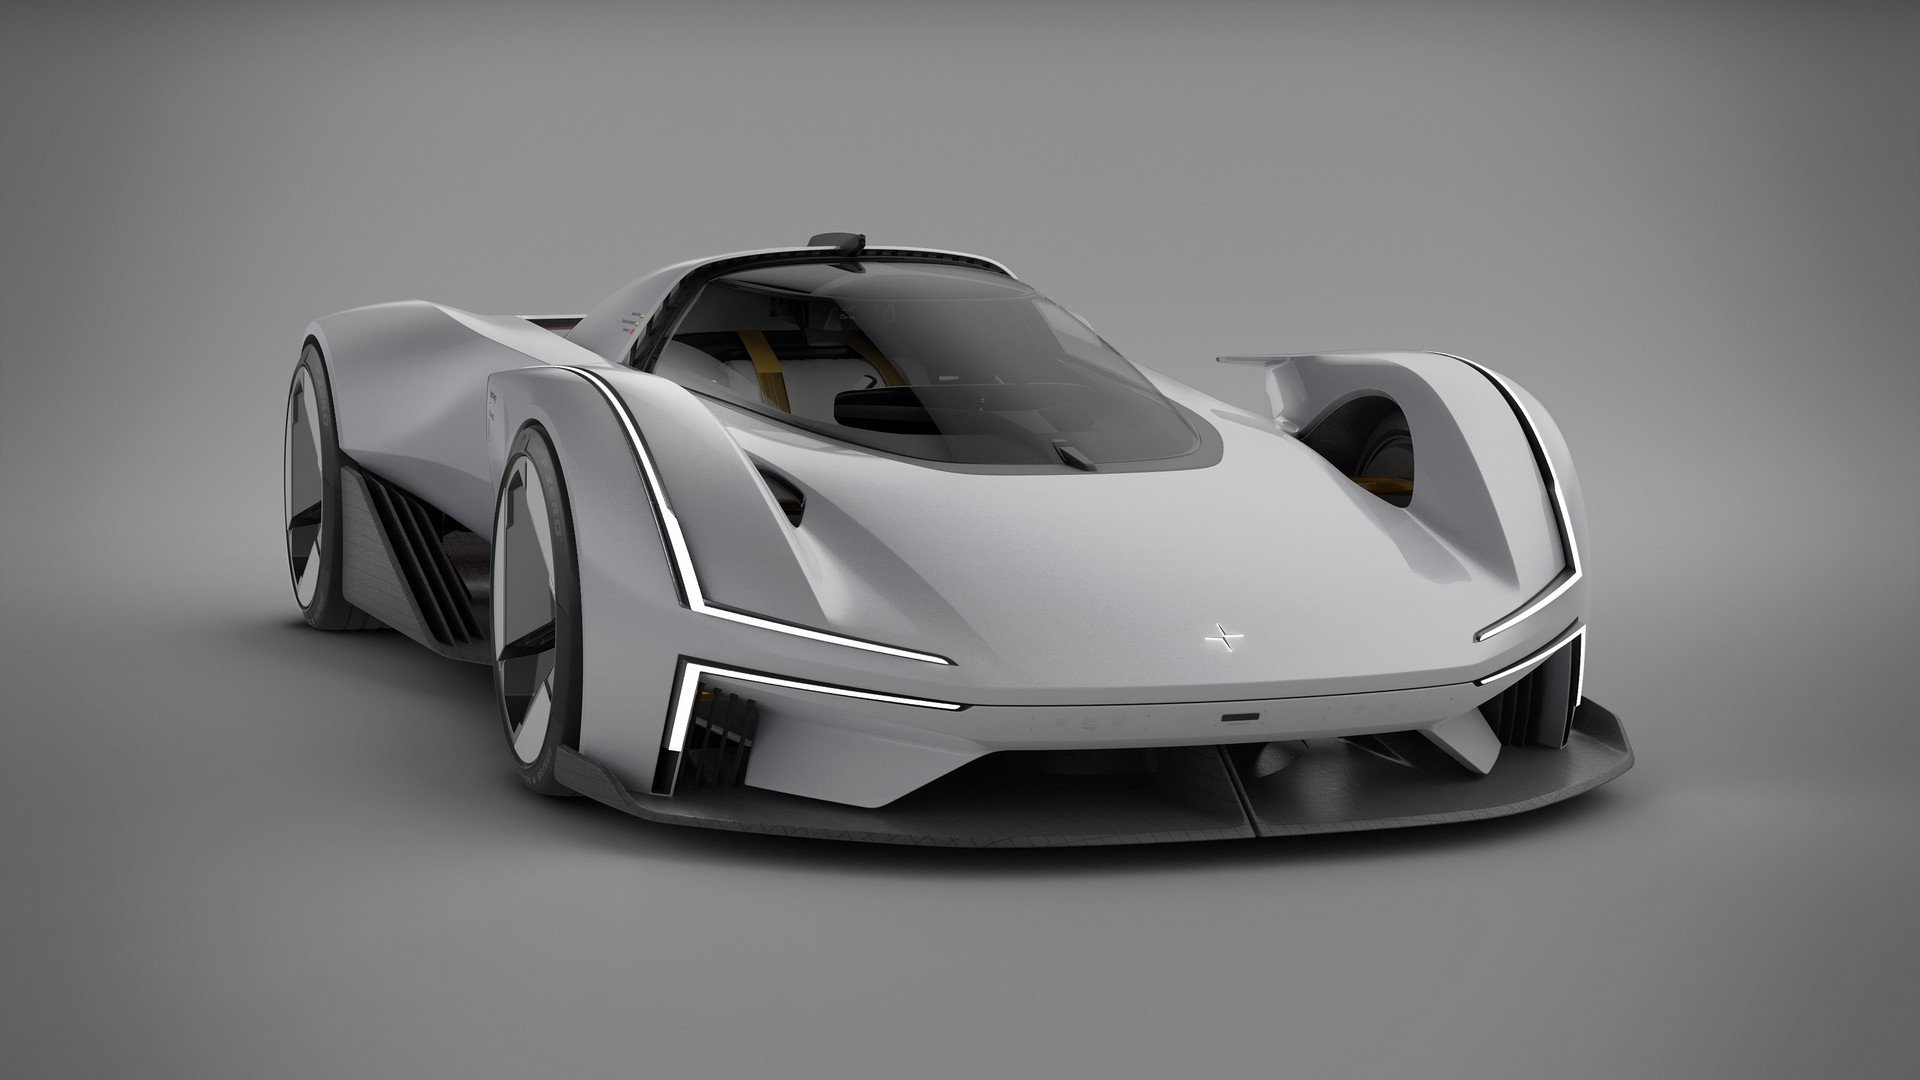 polestar unveils synergy electric fantasy supercar